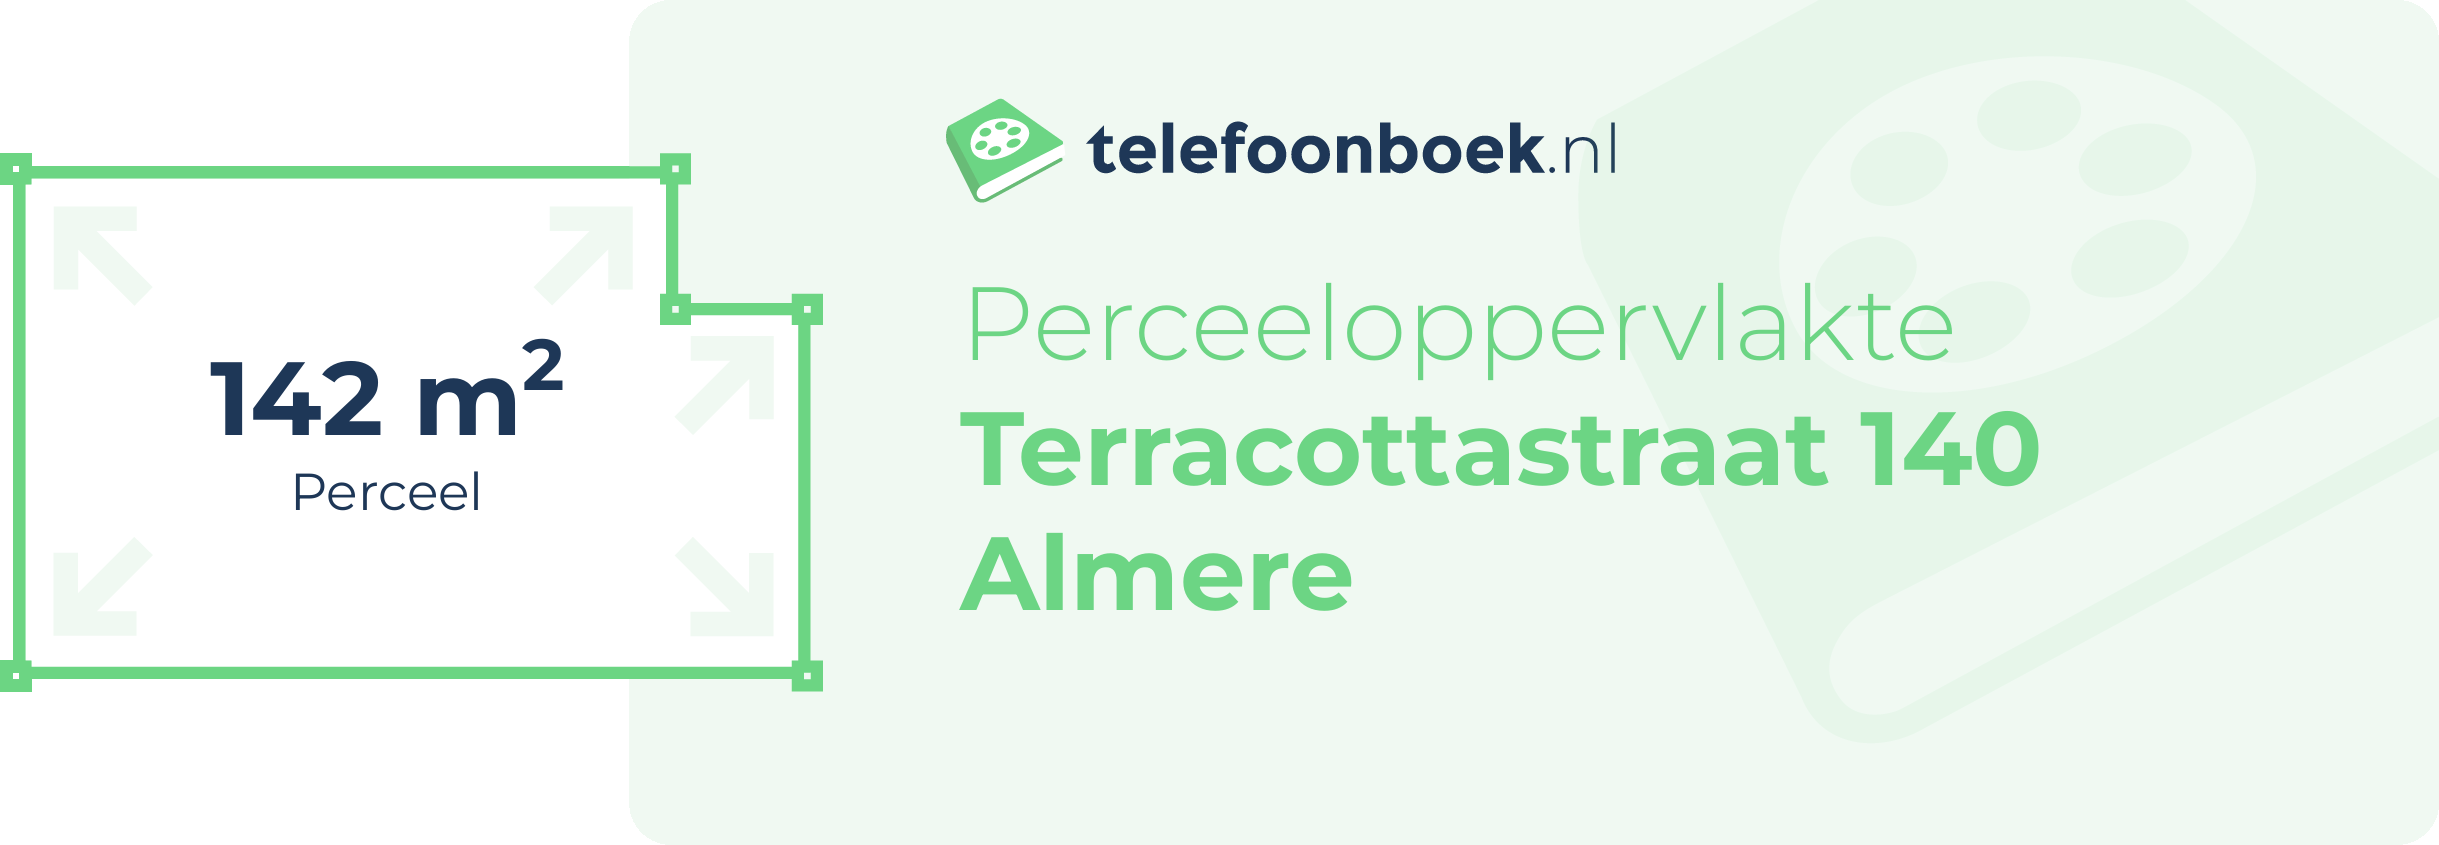 Perceeloppervlakte Terracottastraat 140 Almere